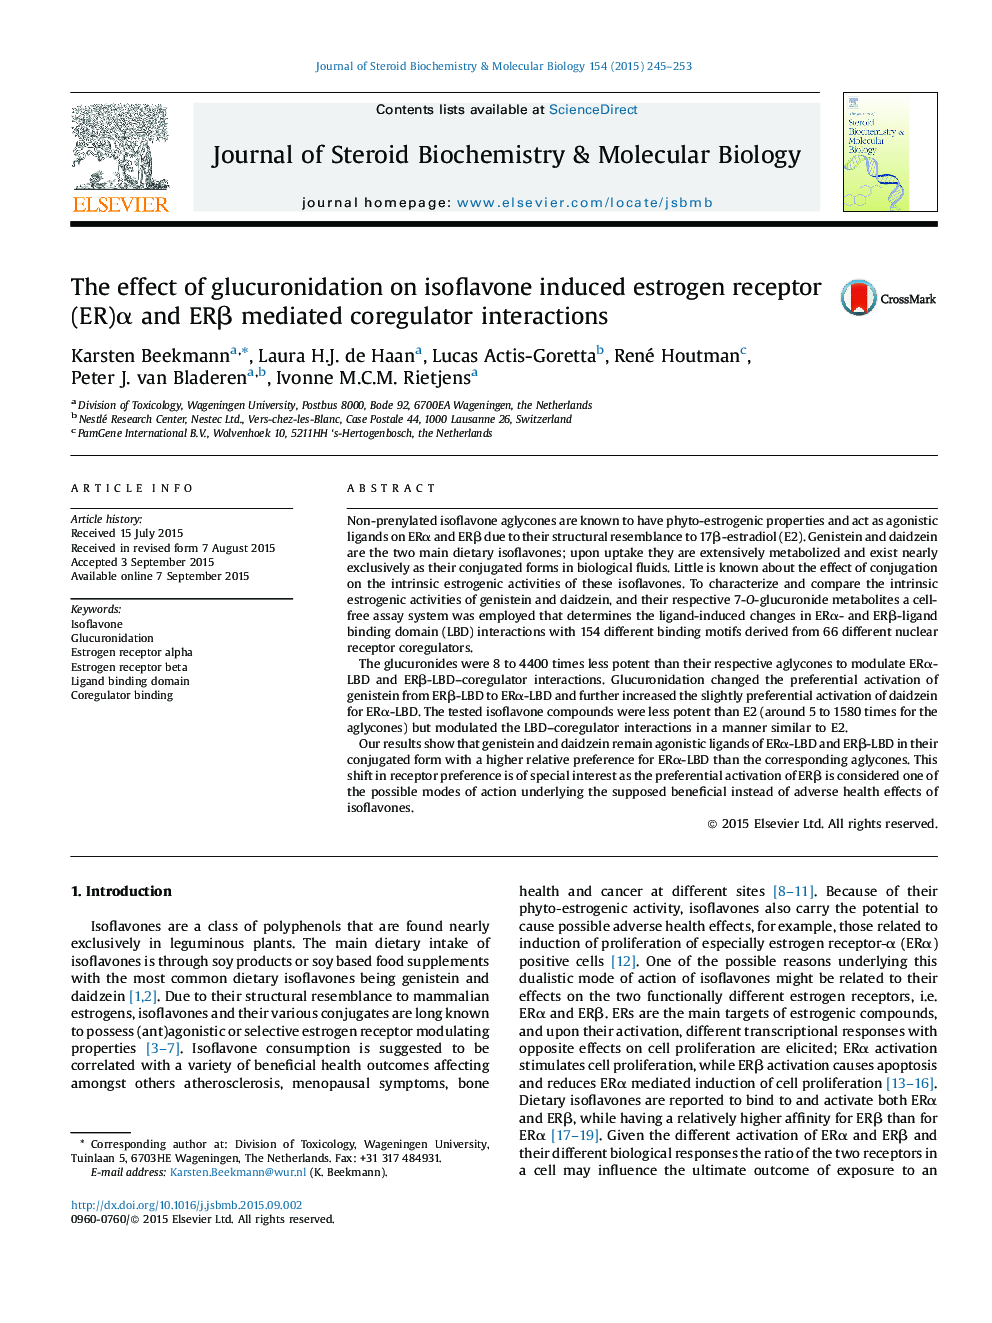 The effect of glucuronidation on isoflavone induced estrogen receptor (ER)α and ERβ mediated coregulator interactions